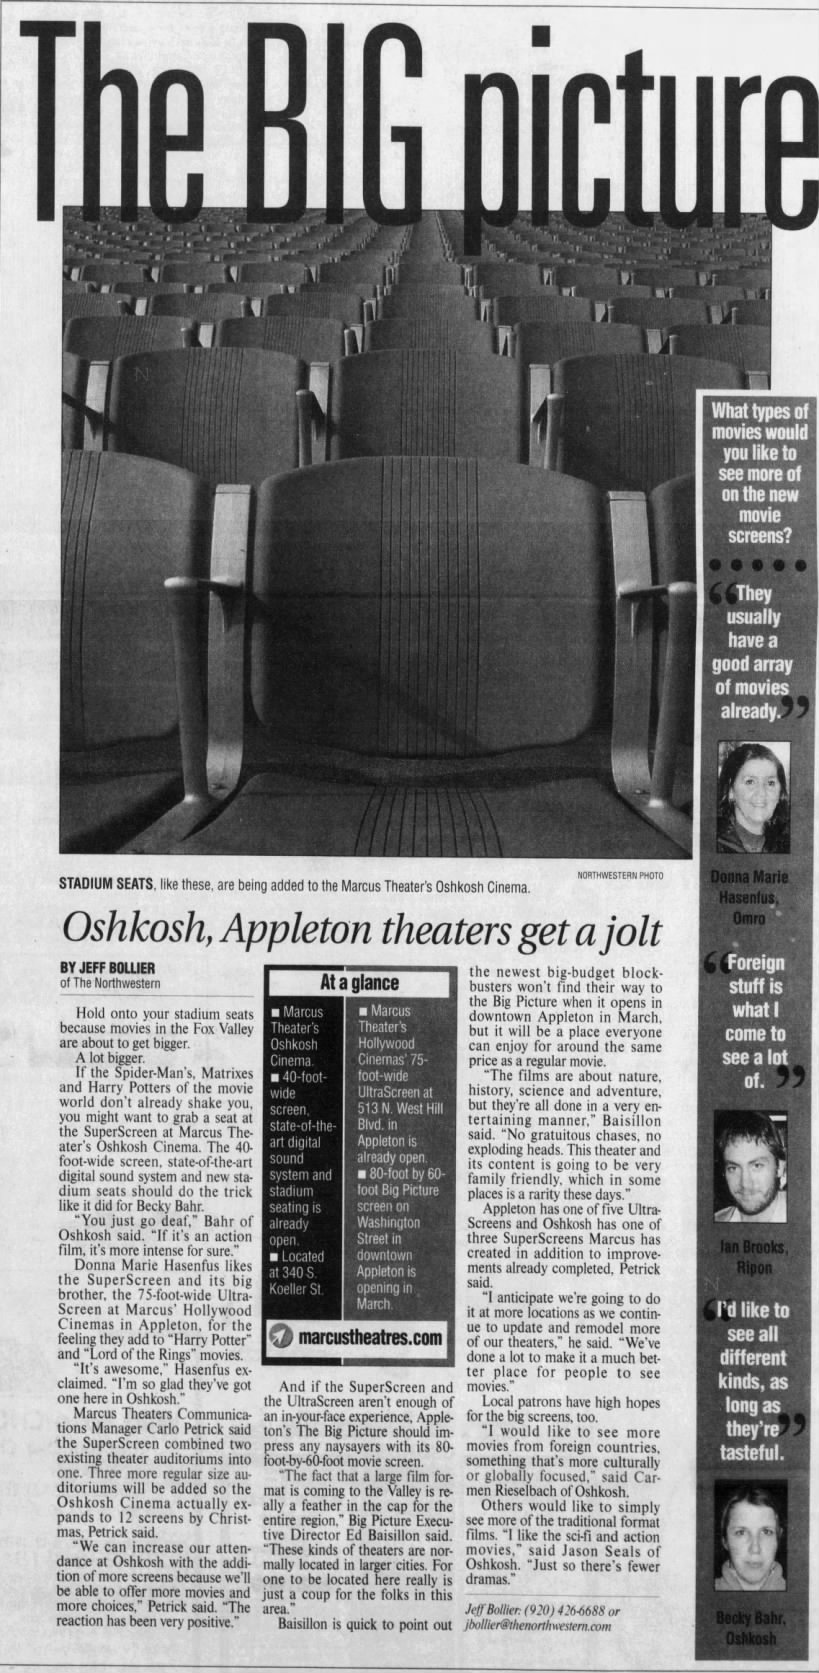 Cinema 12 Oshkosh expansions